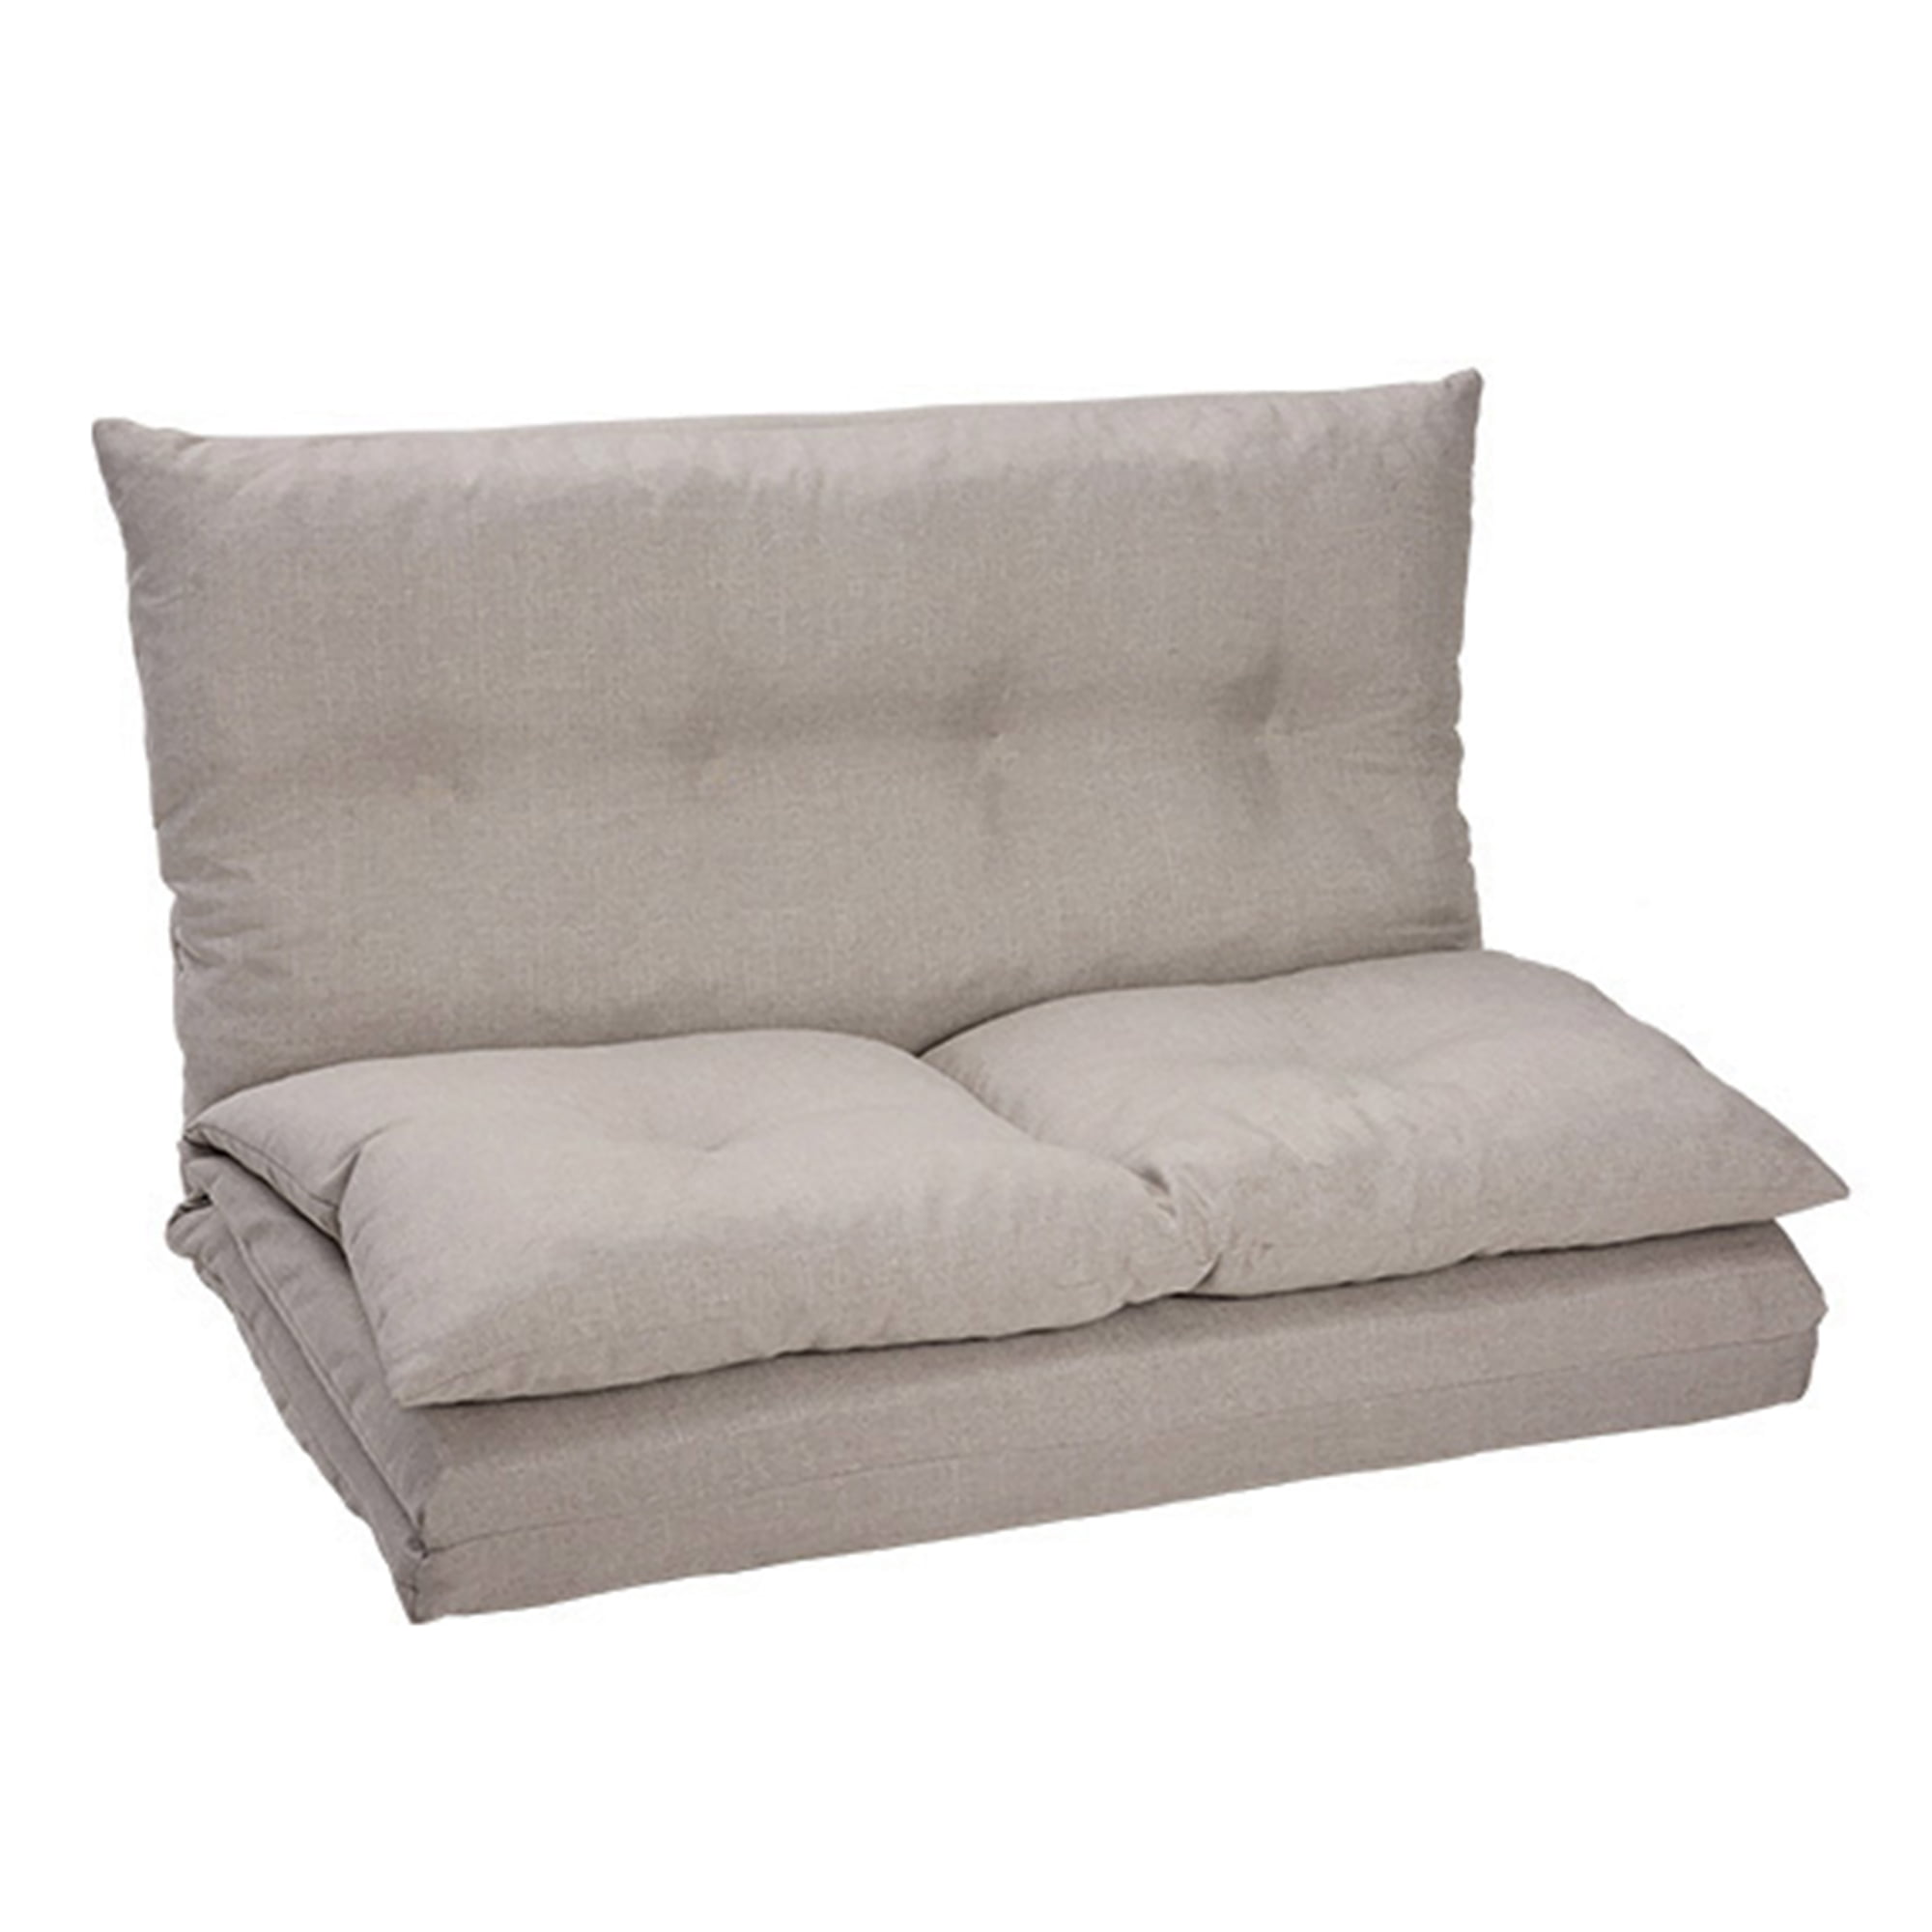 Merax Fabric Folding Chaise Lounge Floor Gaming Sofa Chair Beige 2 